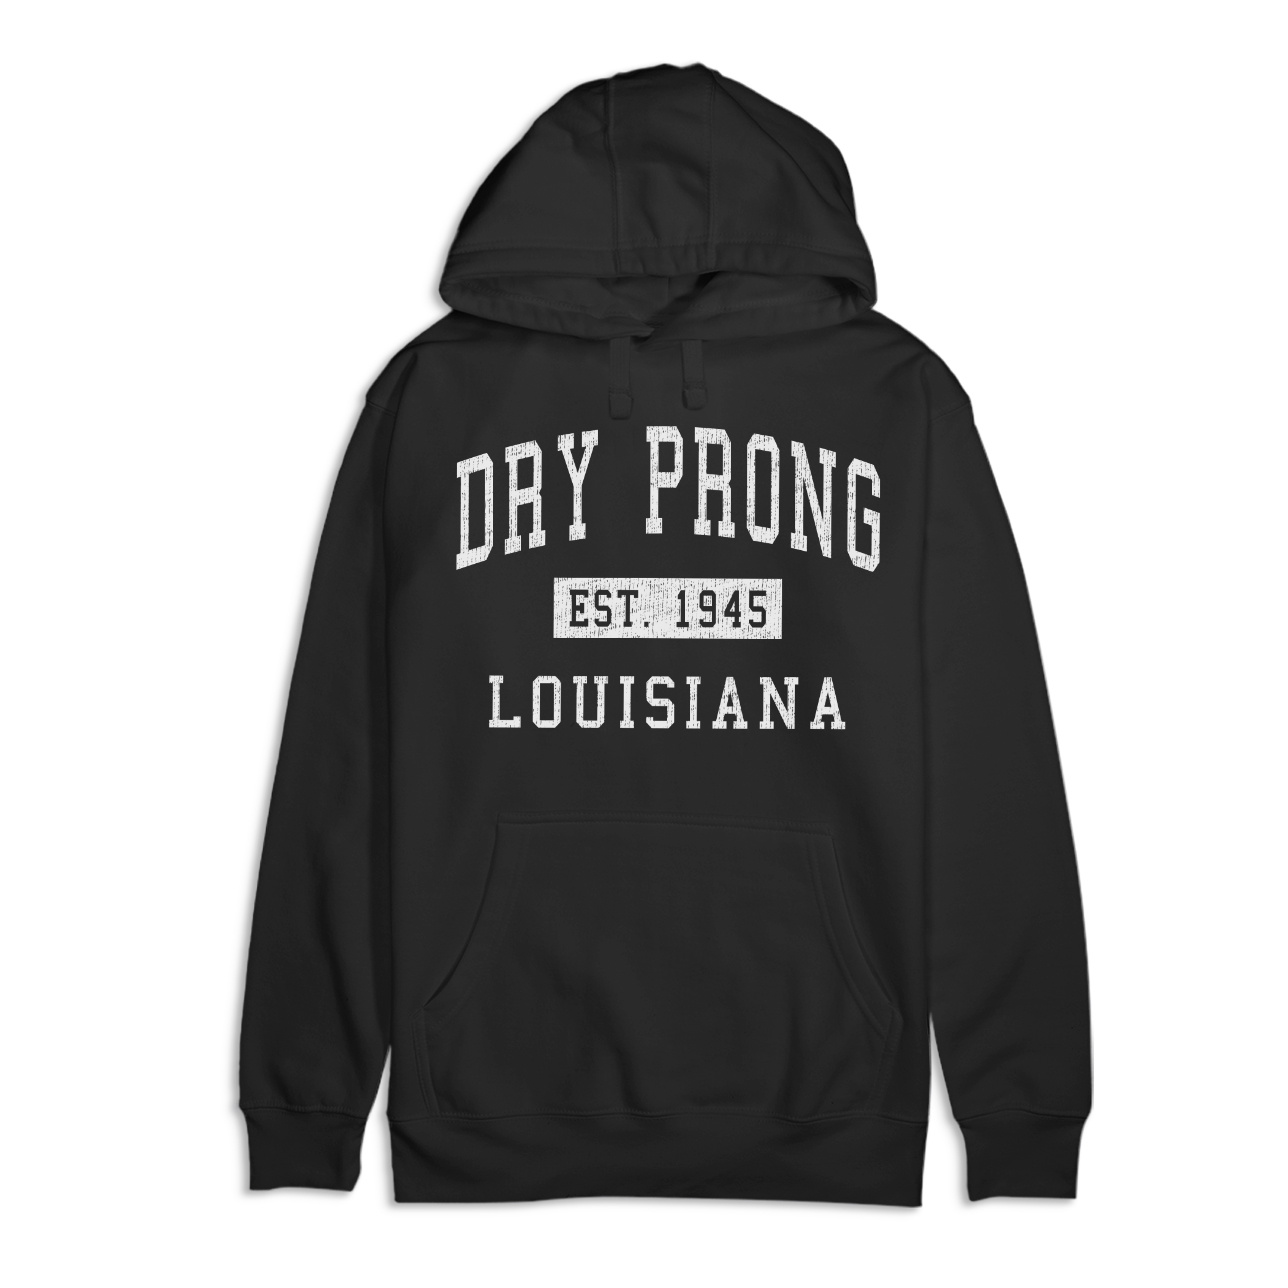 Dry Prong Louisiana Classic Established Premium Cotton Hoodie - image 1 of 1